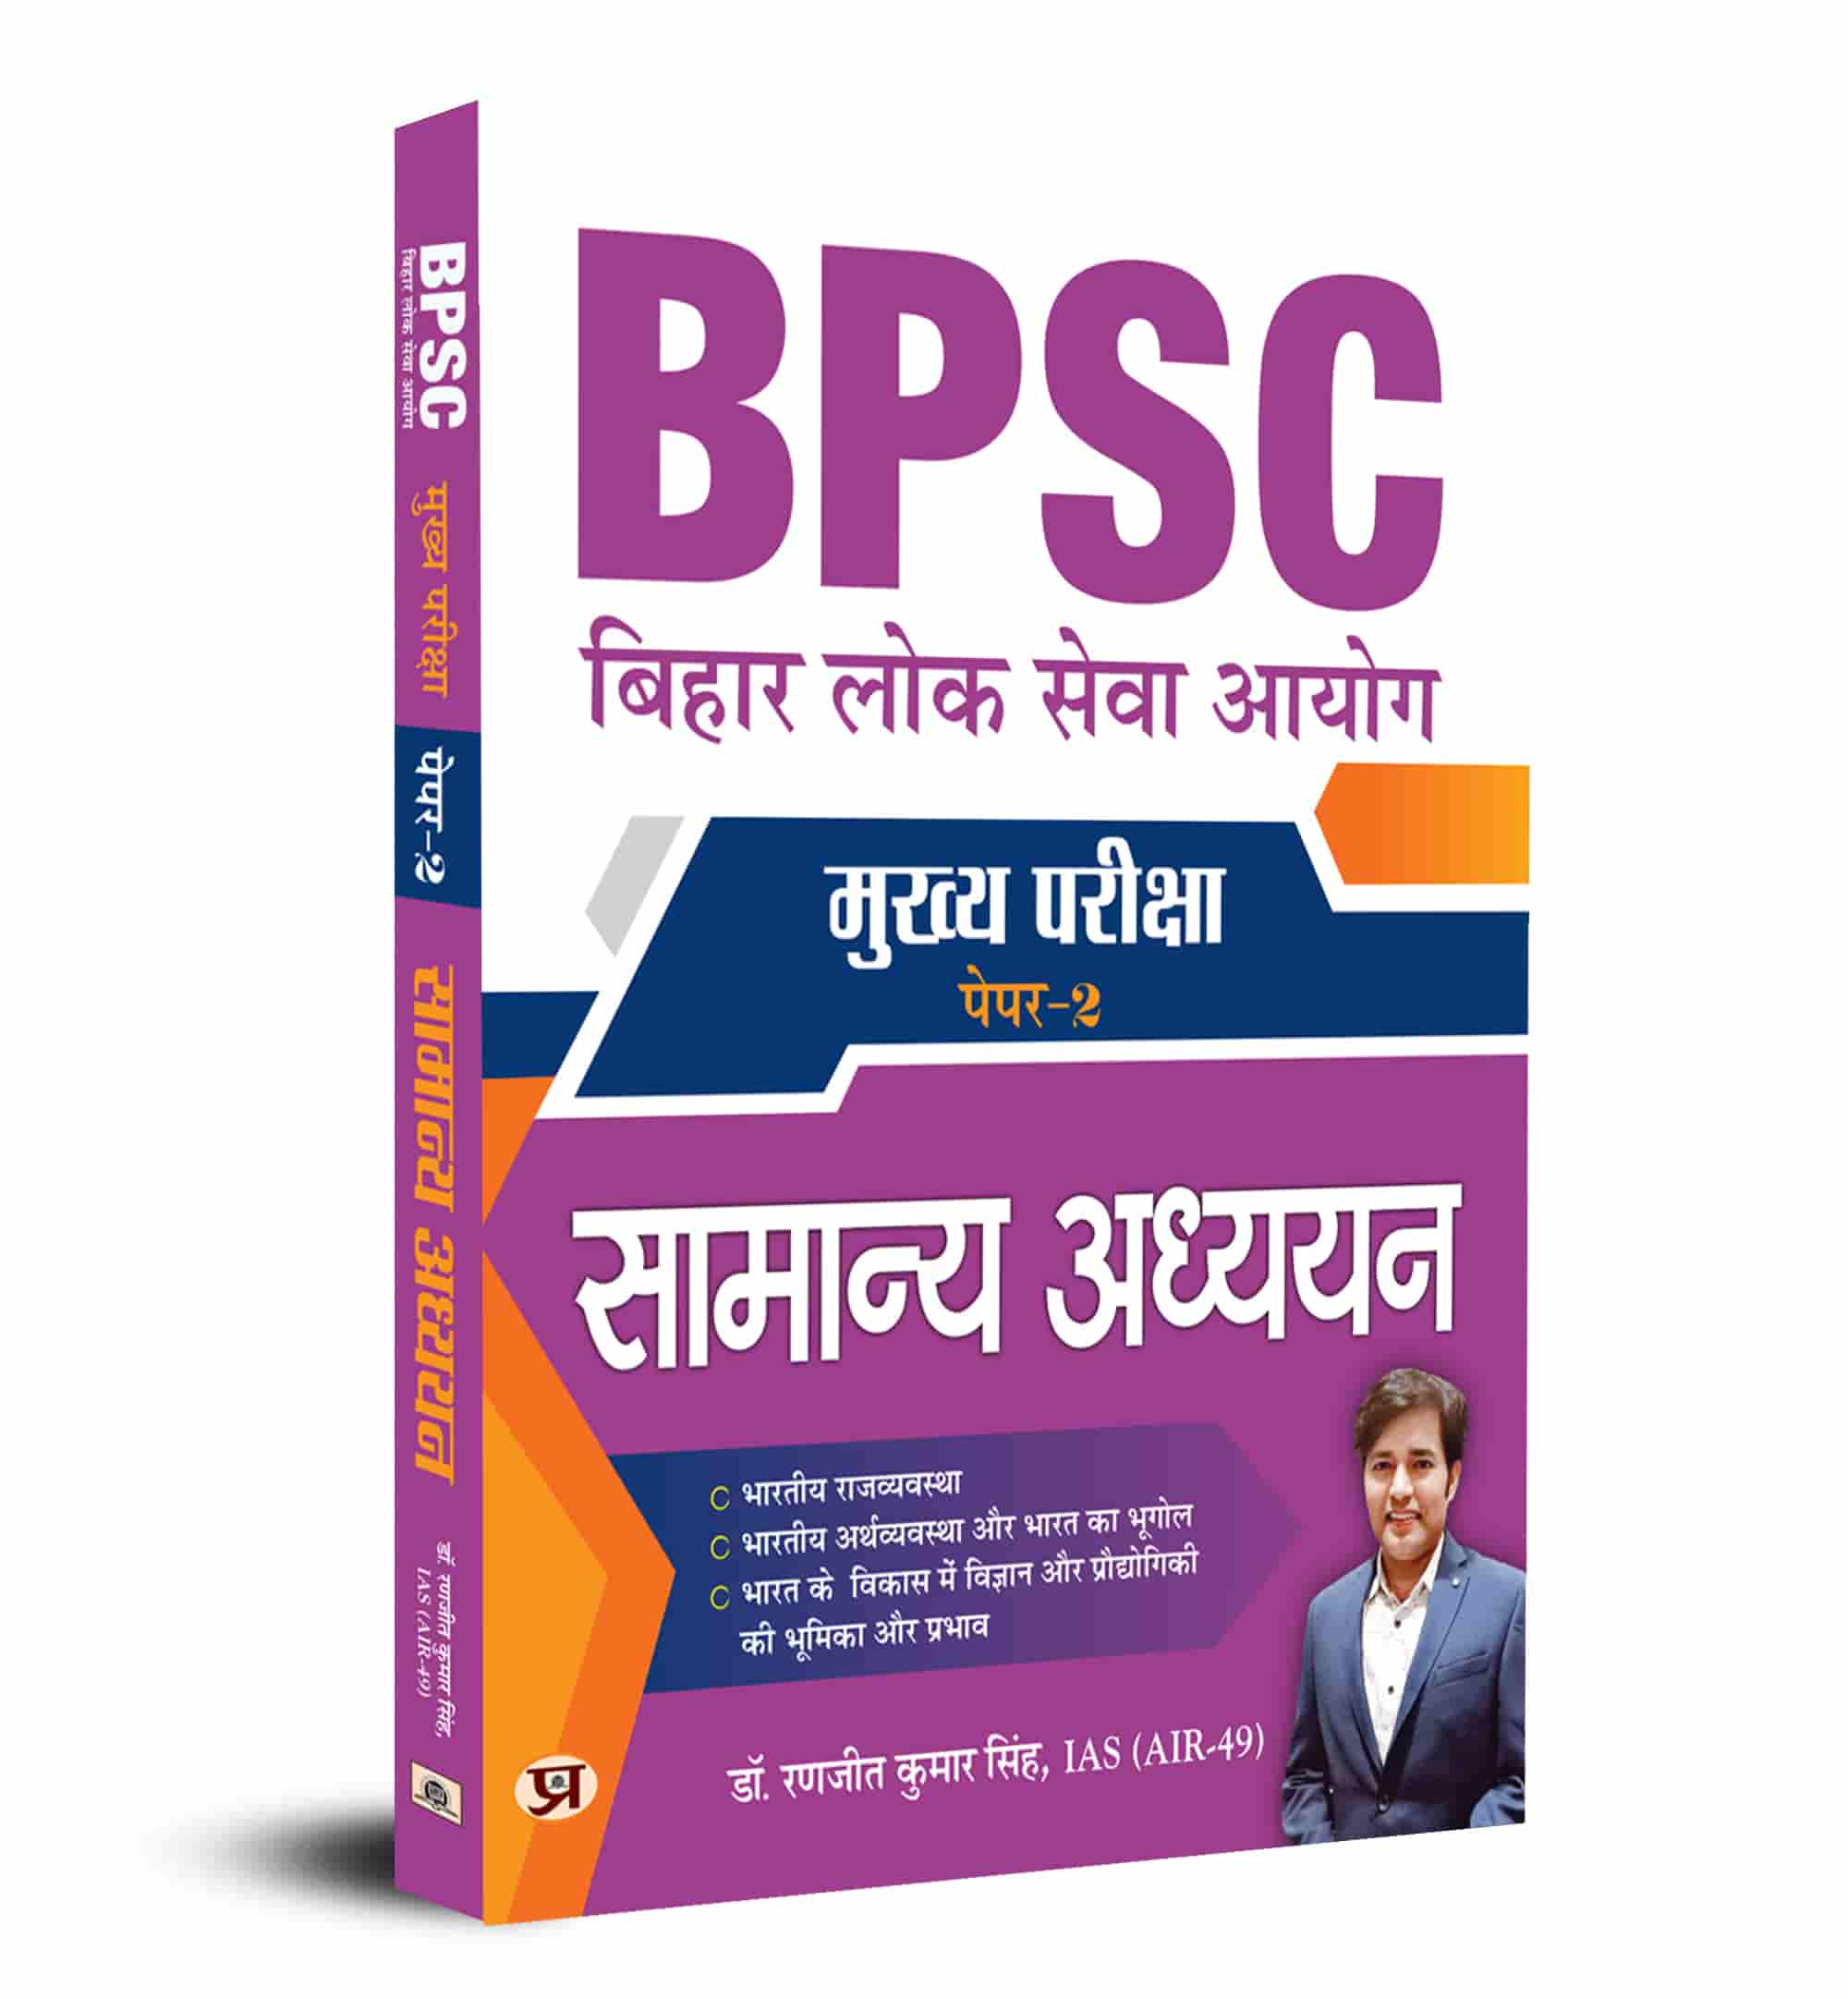 BPSC Mains Paper-2 Samanya Adhyayan (General Studies) for 69th BPSC Mains Examination